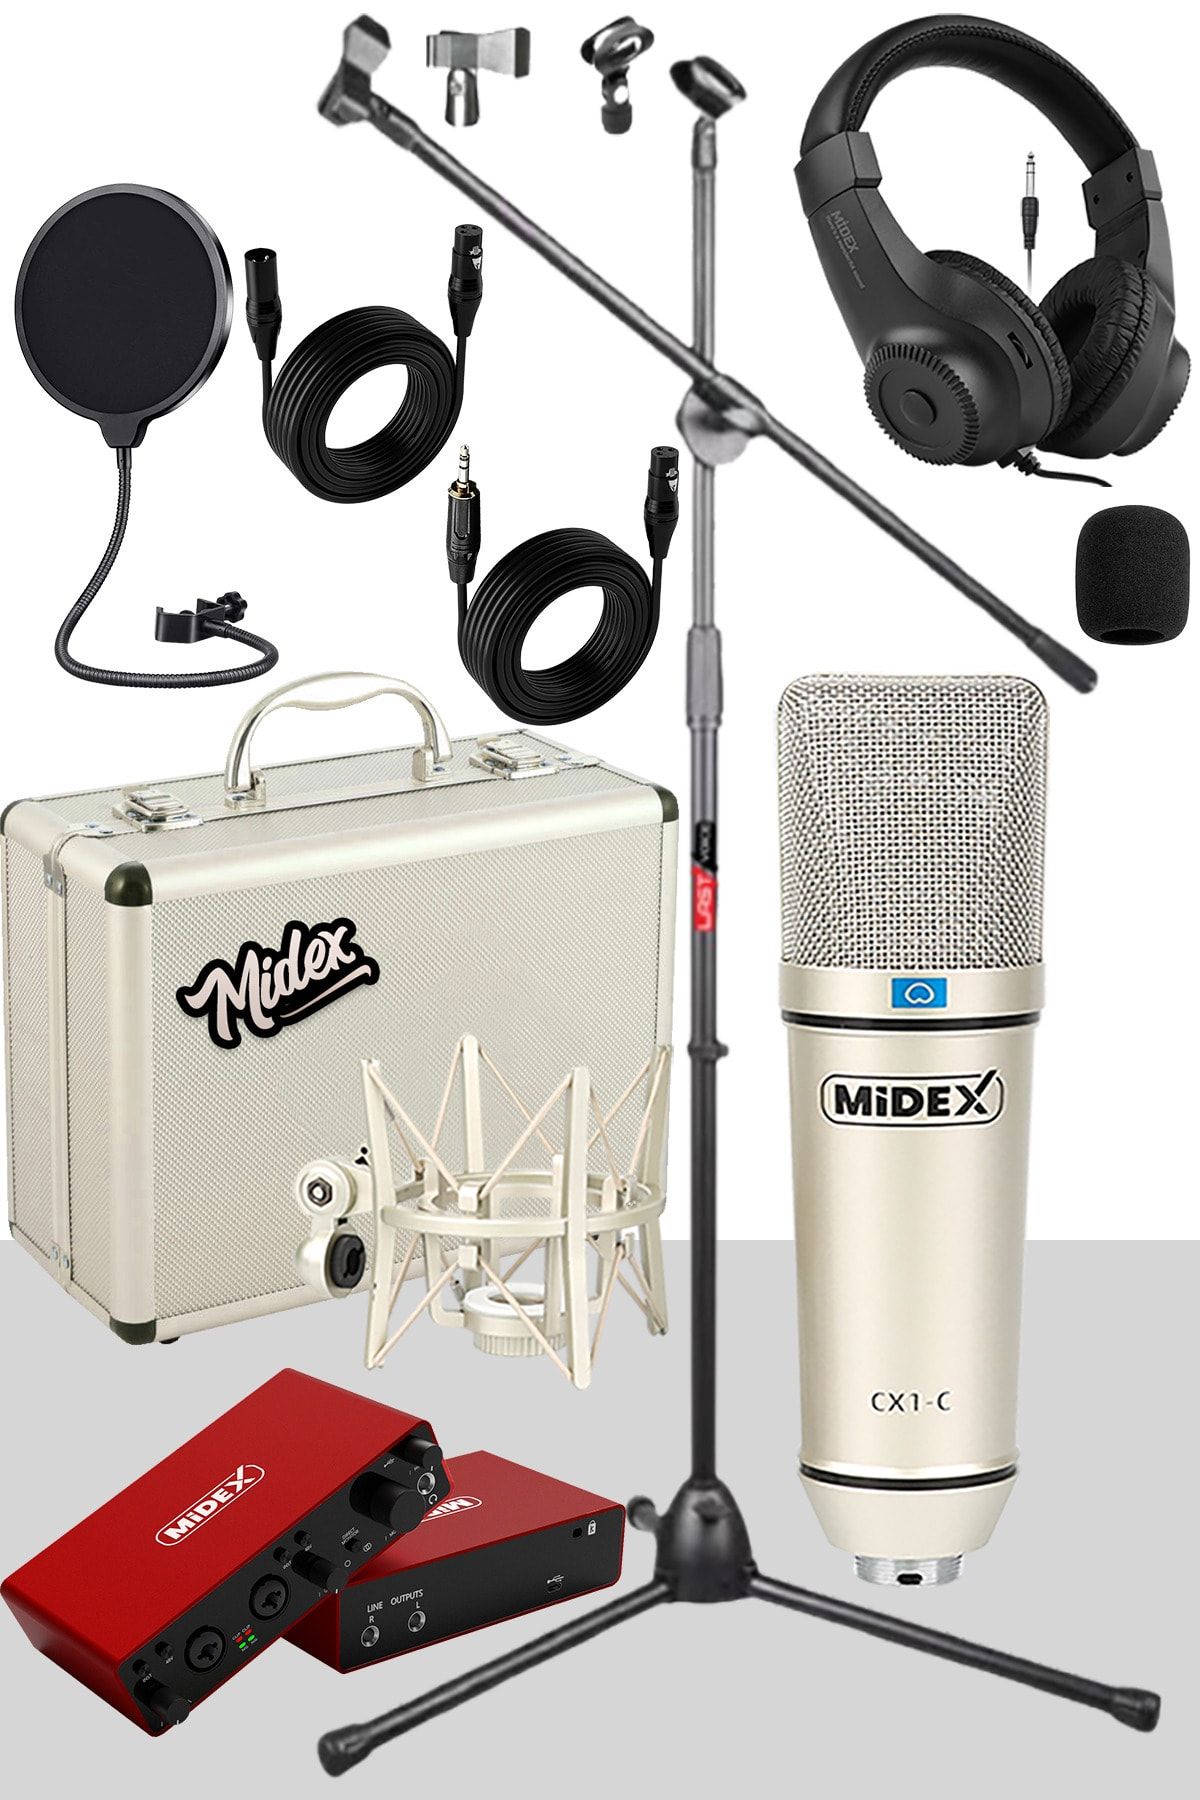 Midex Cx1-c Mikrofon Glx-800 Kulaklık Ms06 Stand Shock Mount Pop Filtre Set